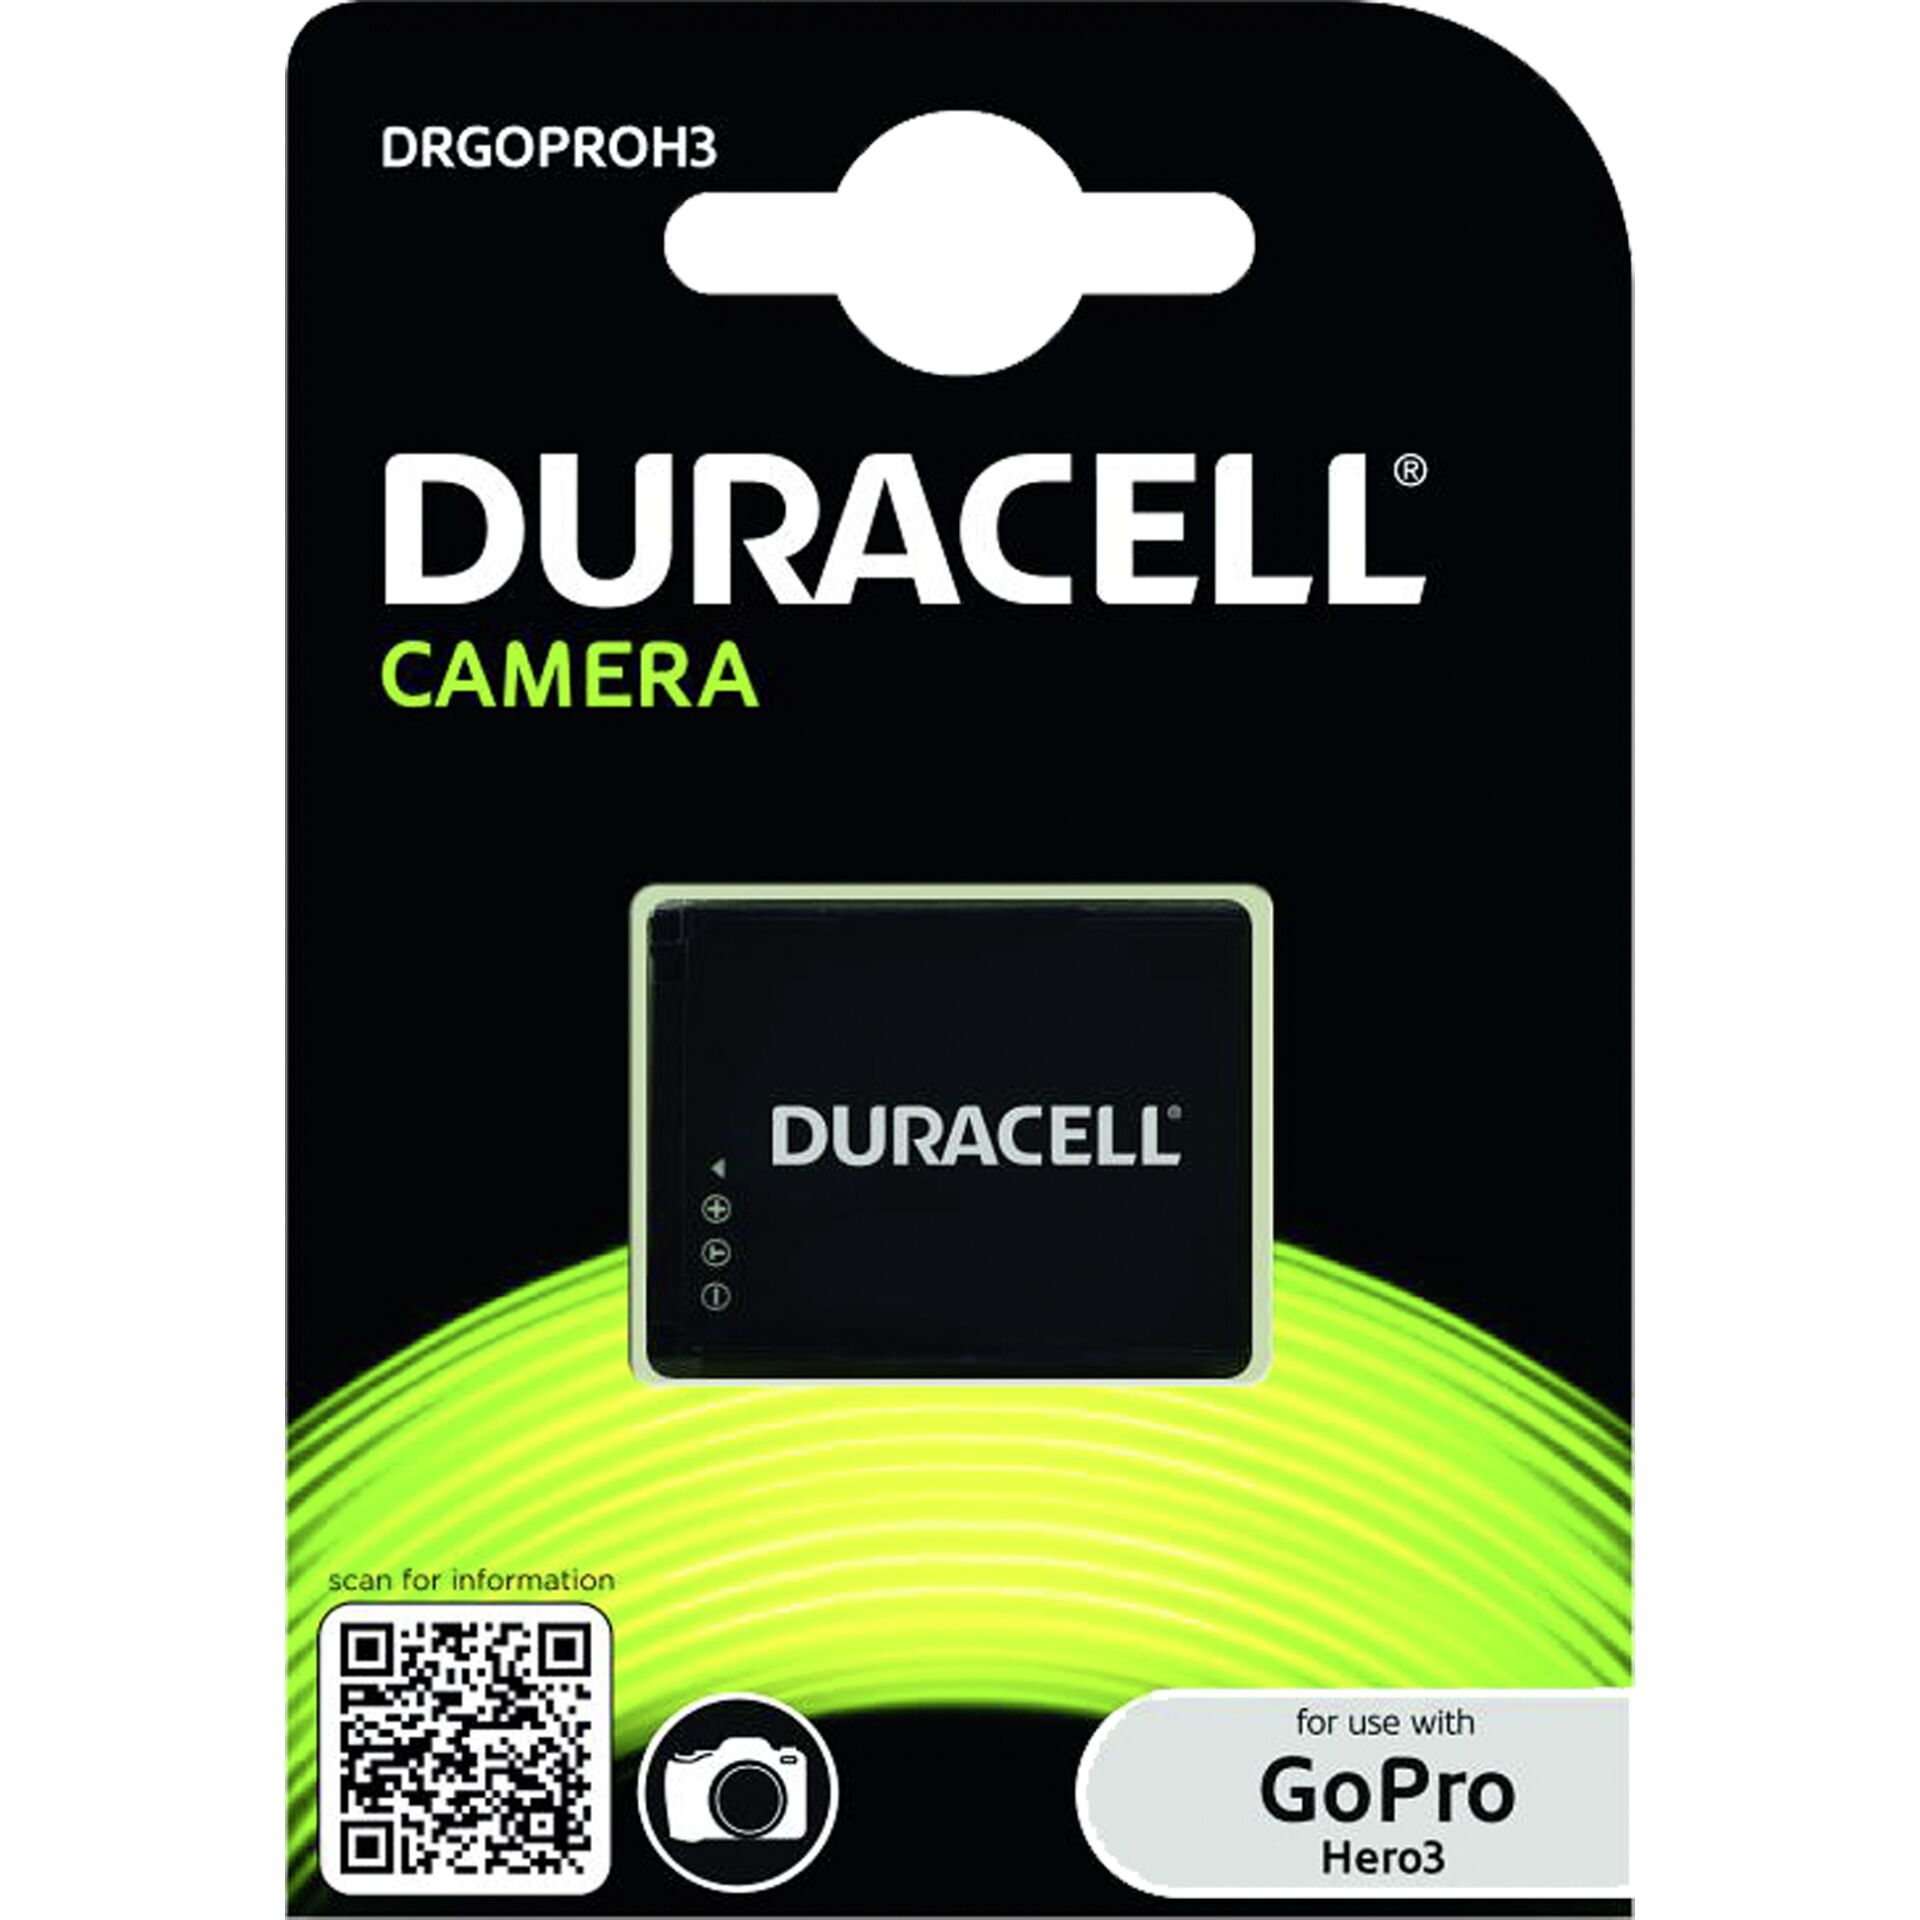 Duracell DRGOPROH3 Kamera-/Camcorder-Akku Lithium-Ion (Li-Ion) 1000 mAh